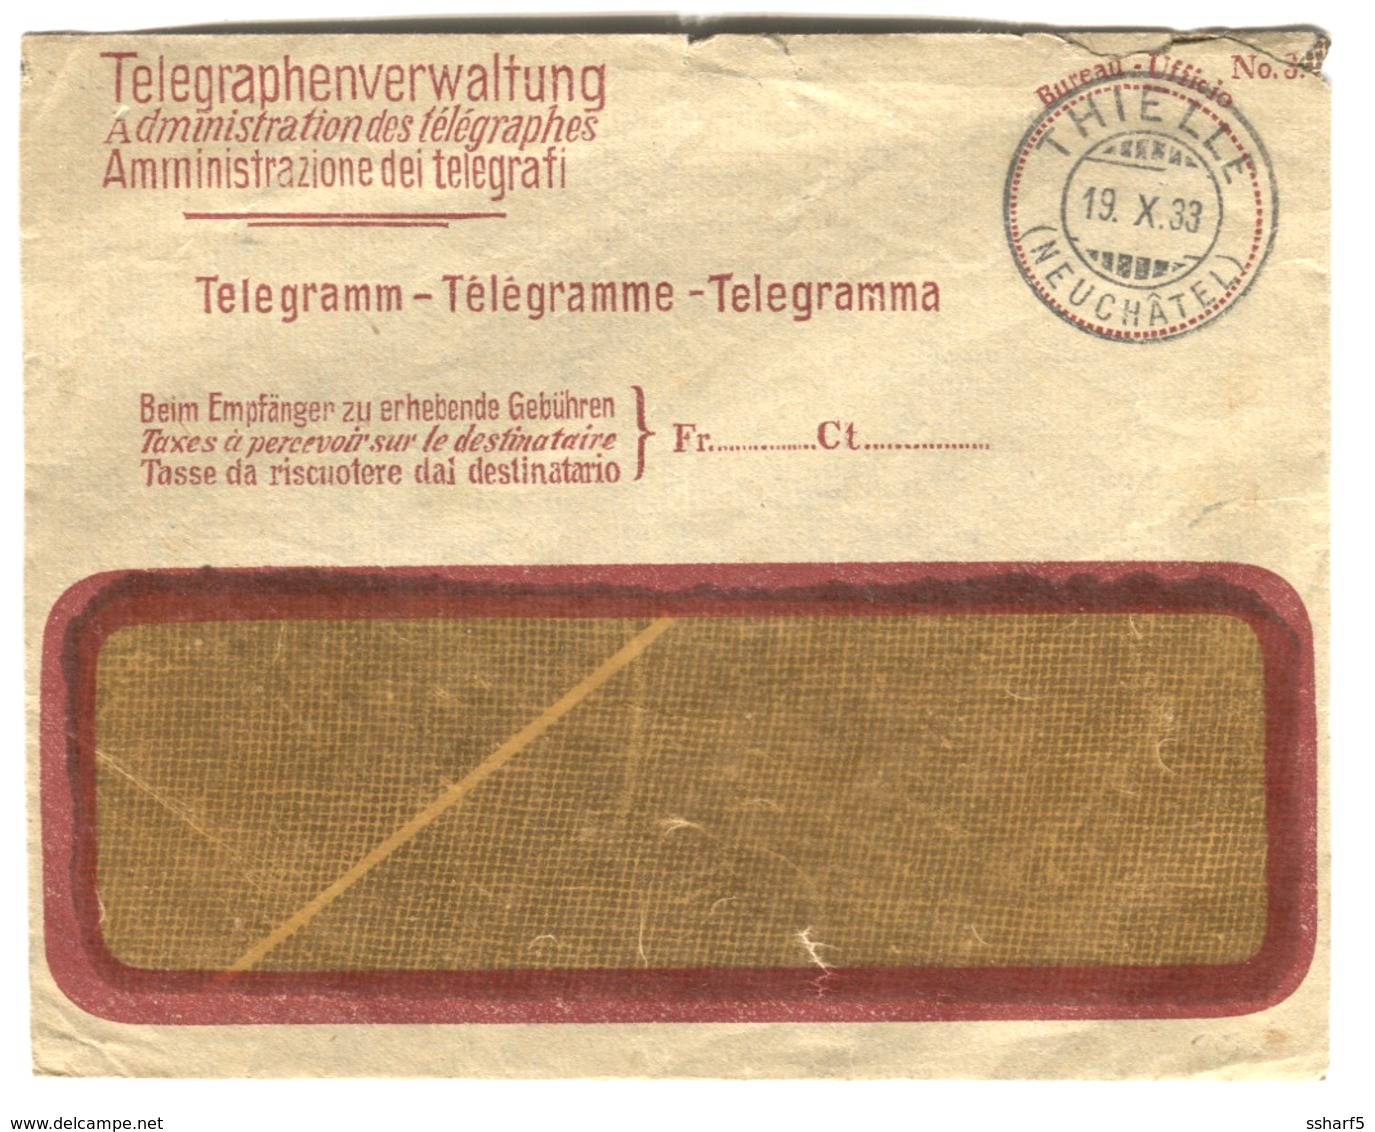 Telegramme Cover THIELLE Neuchâtel 1933 - Telegraph